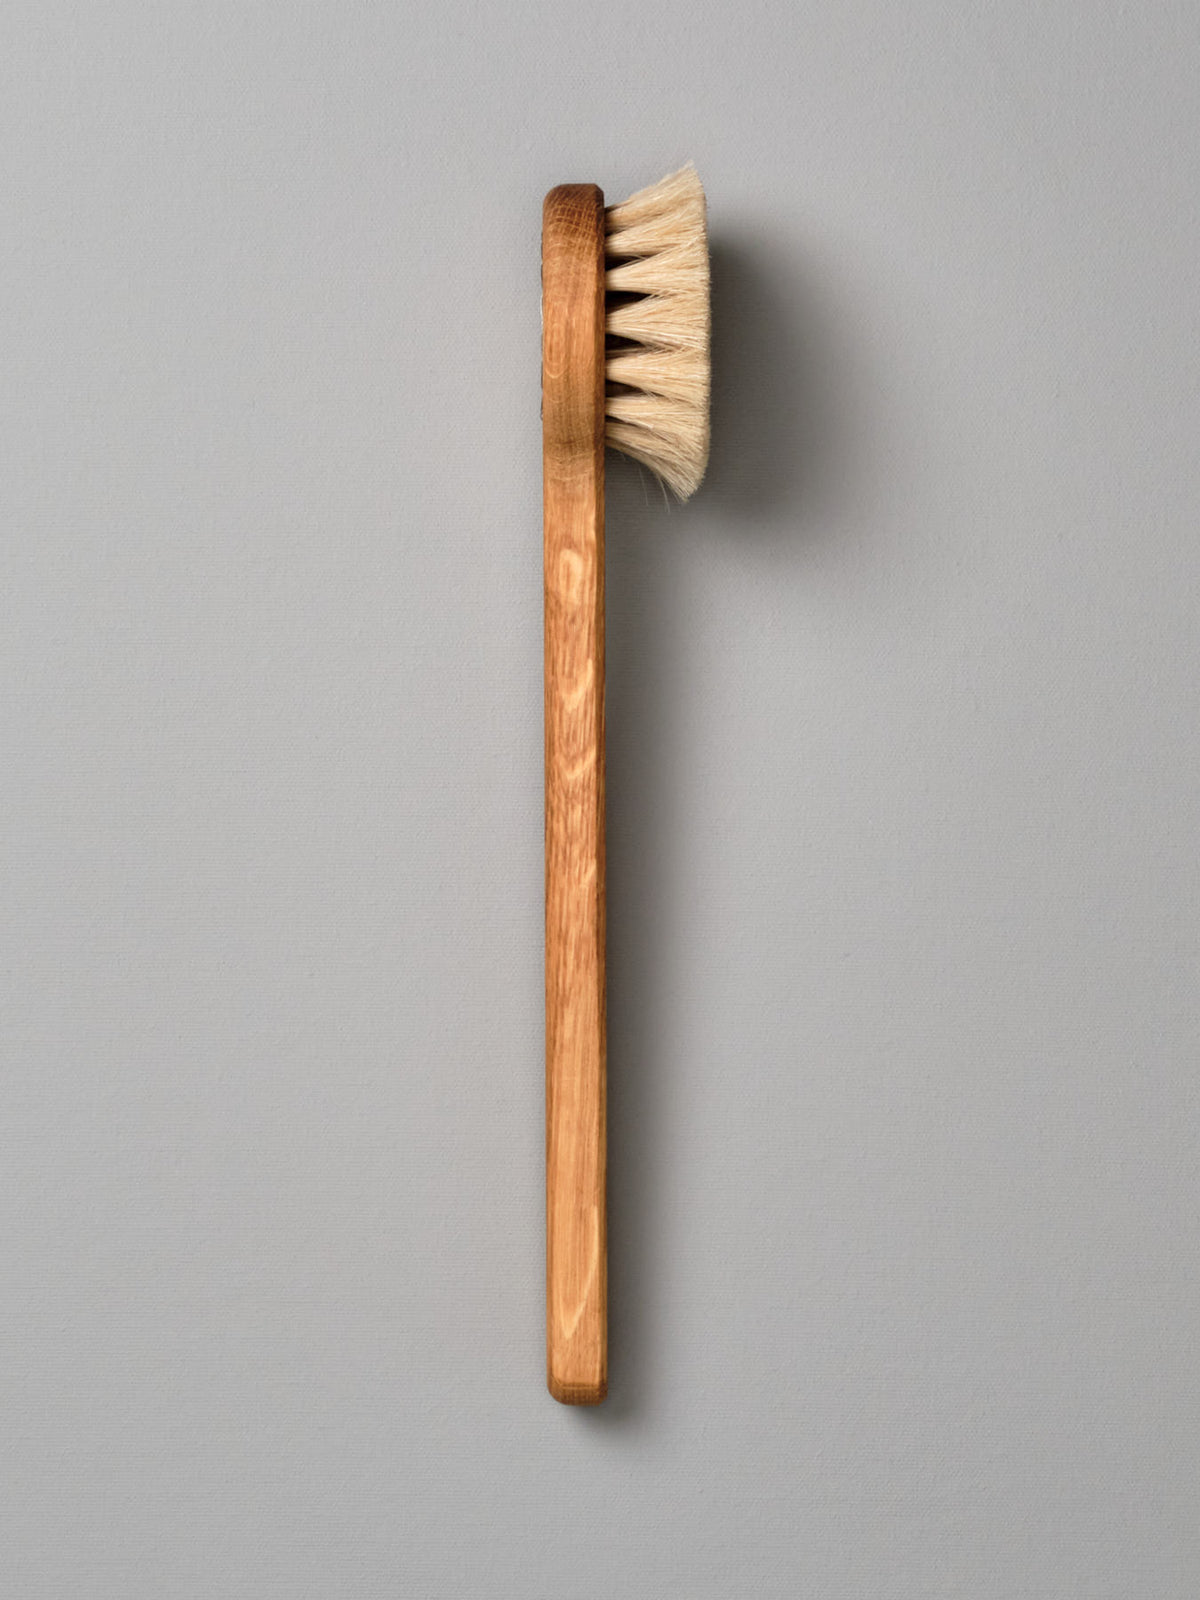 An Iris Hantverk Body Brush - Round Head with a handle on a gray background.